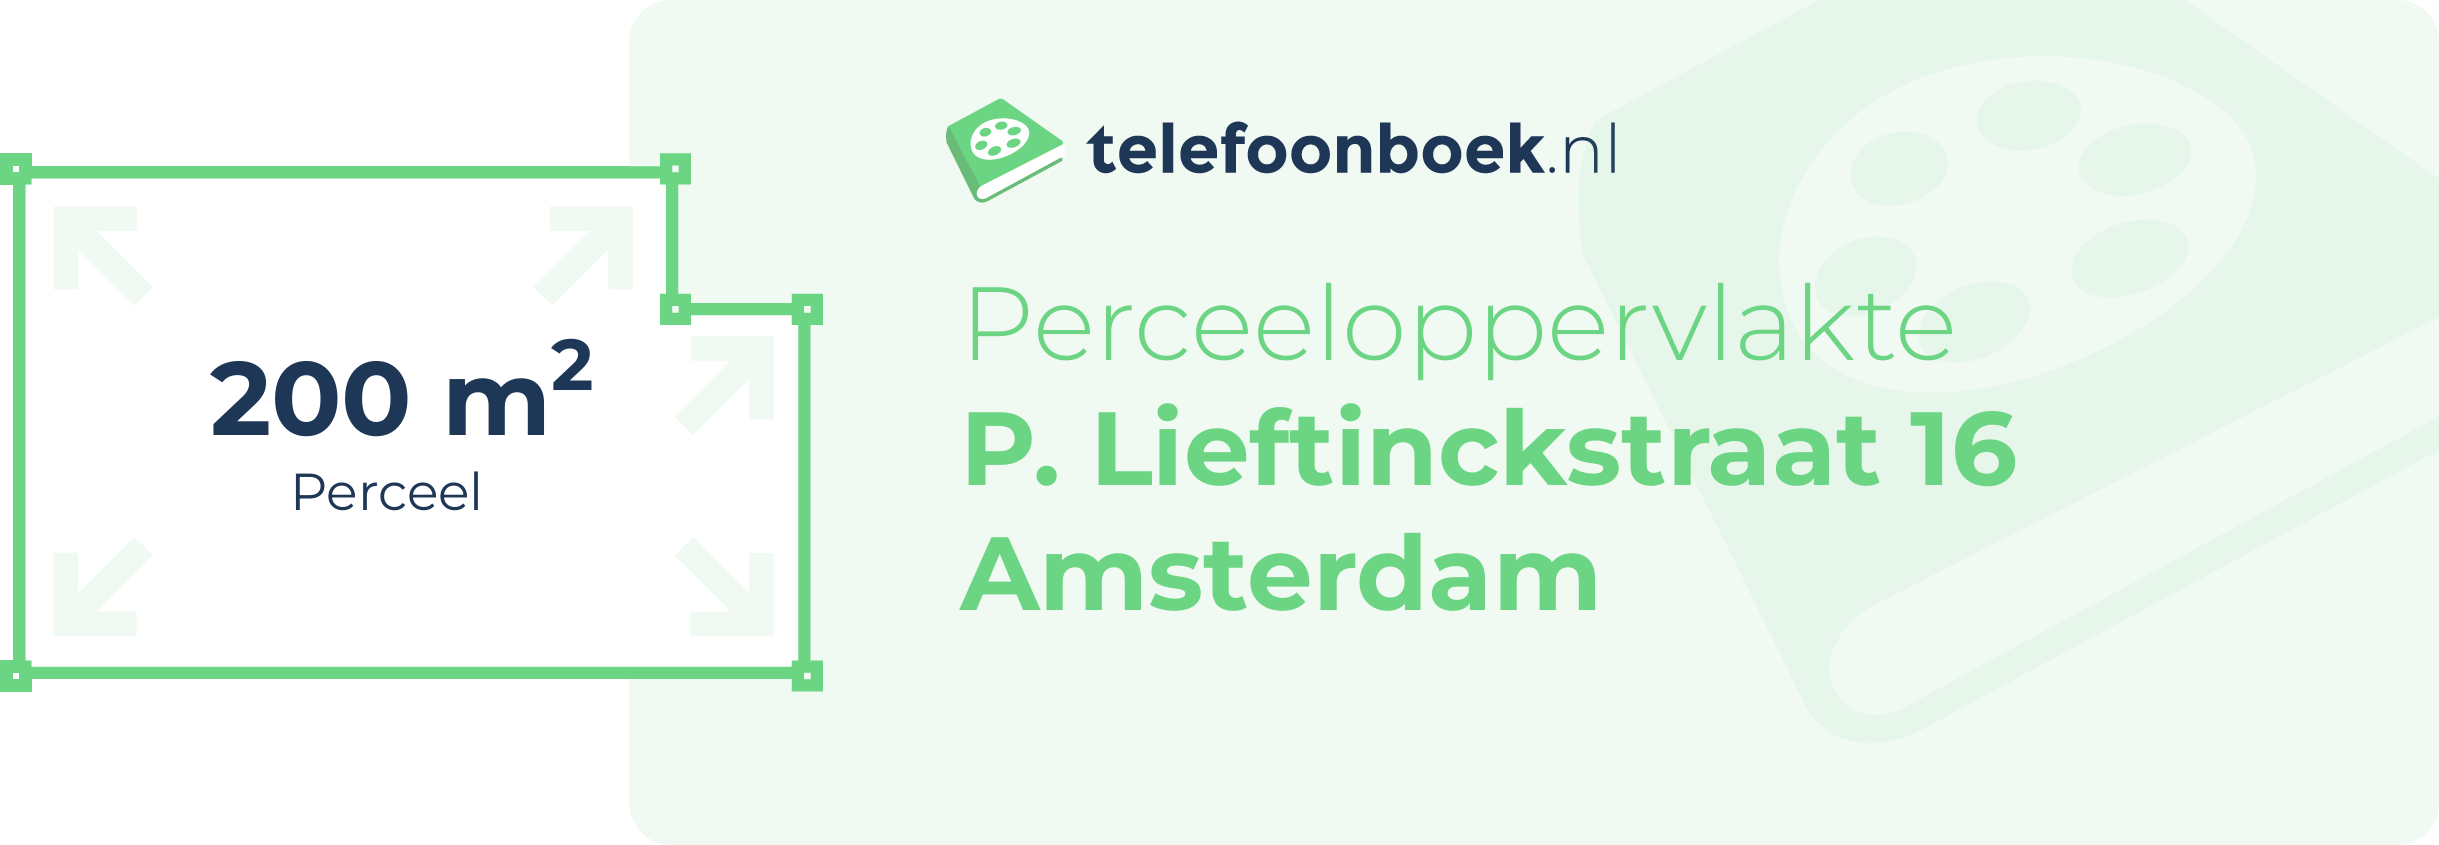 Perceeloppervlakte P. Lieftinckstraat 16 Amsterdam